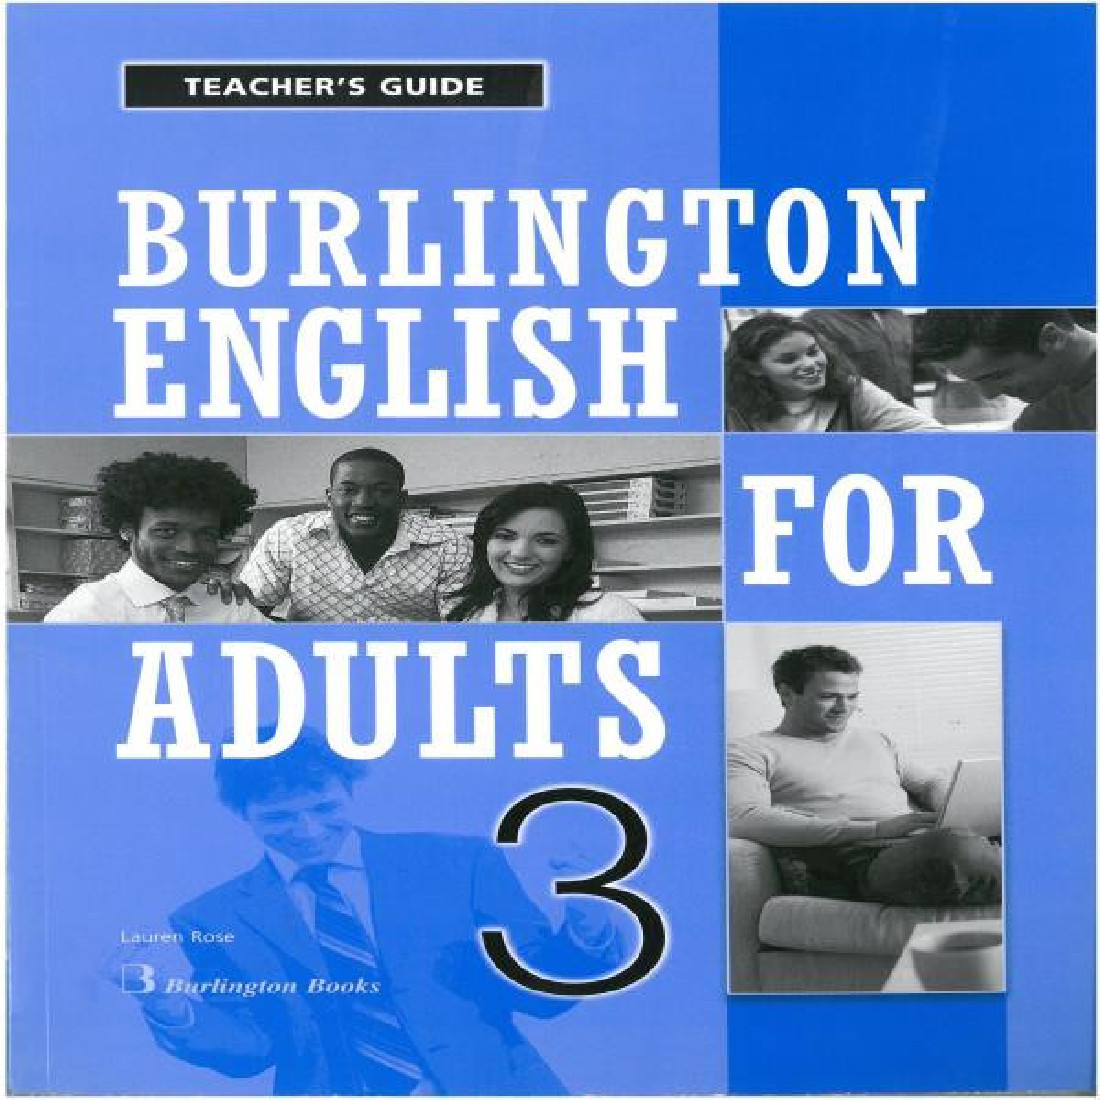 BURLINGTON ENGLISH FOR ADULTS 3 TEACHERS GUIDE